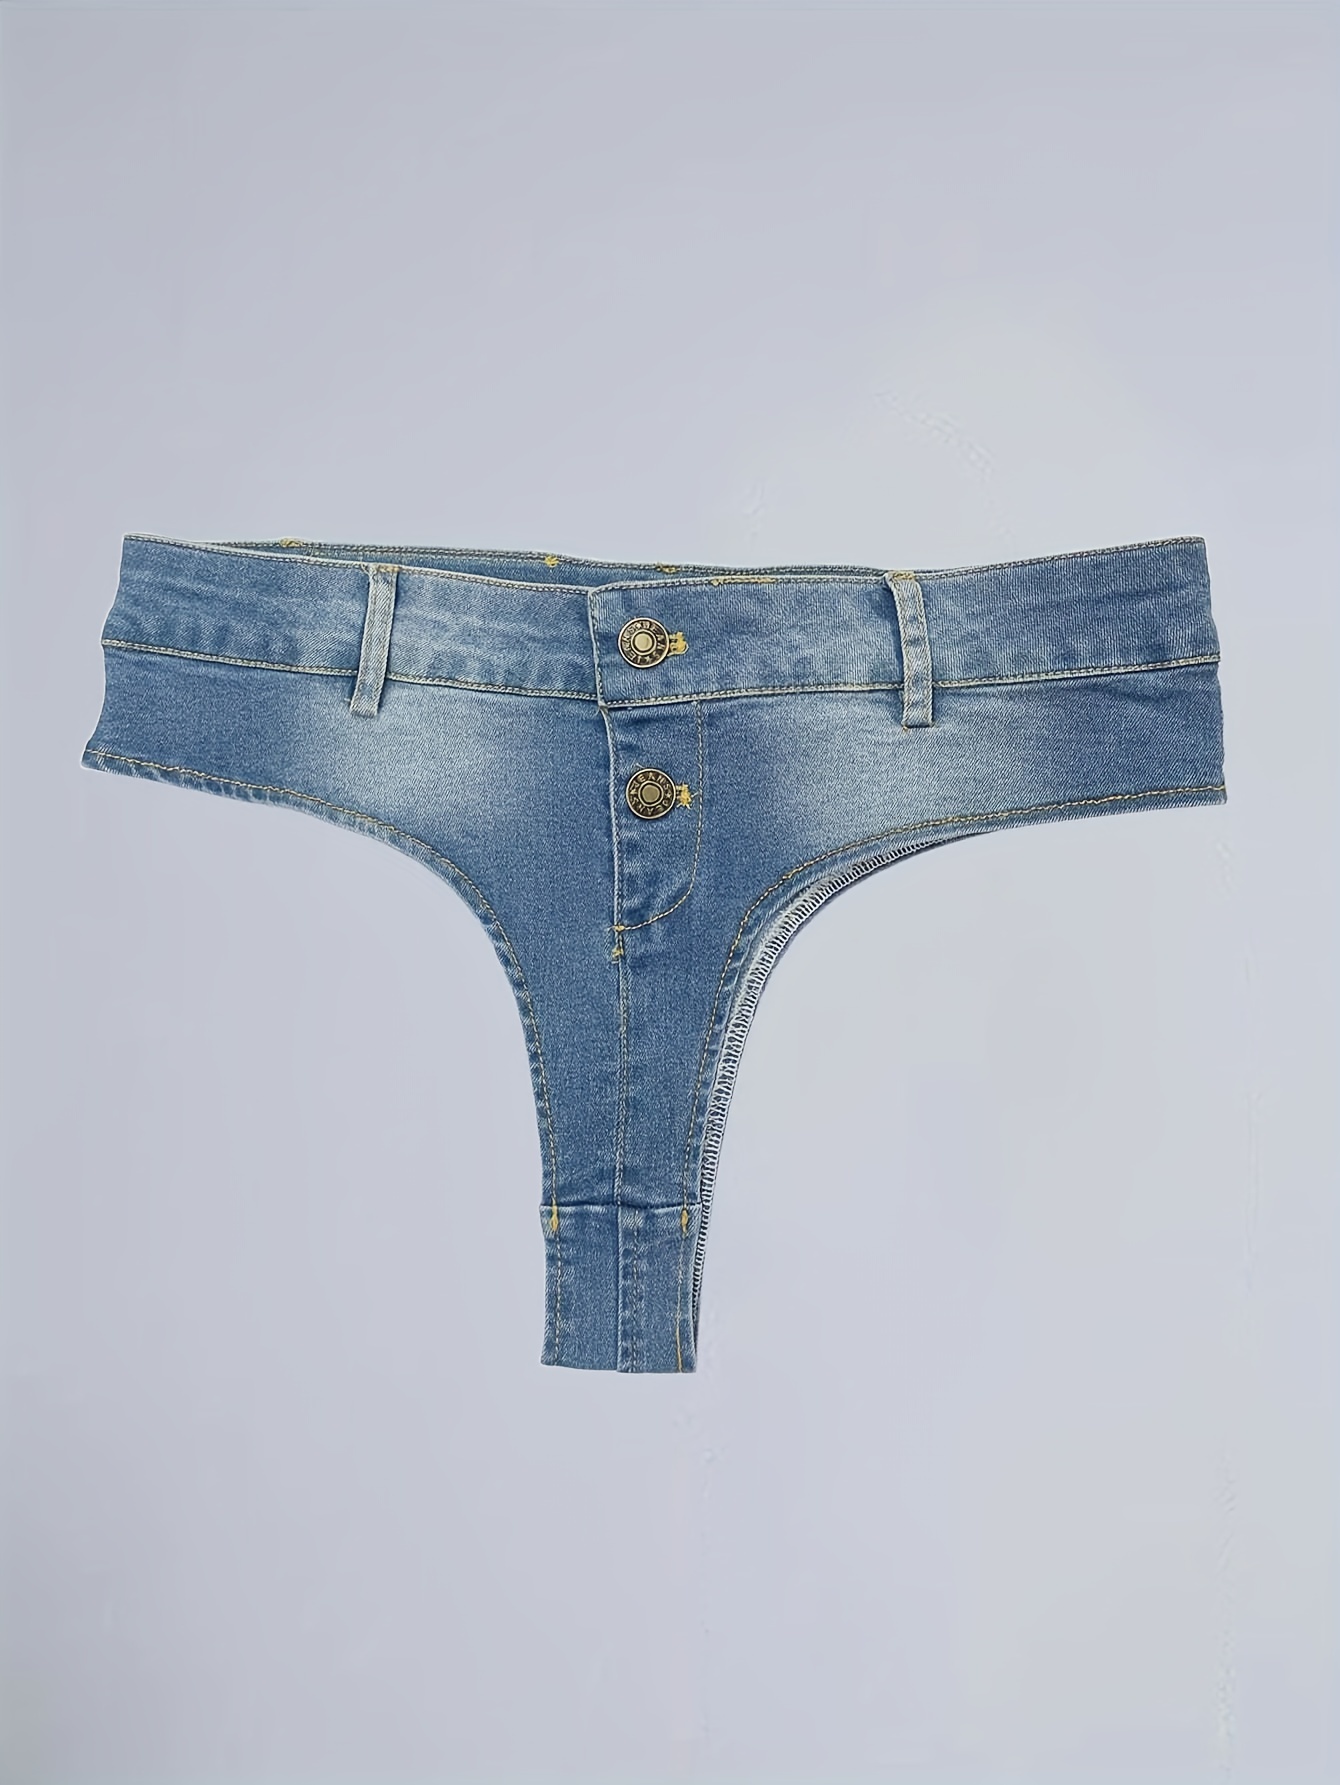 Women Sexy Denim Shorts Stretch Mini Micro Short Jeans Hot Pants High Waist